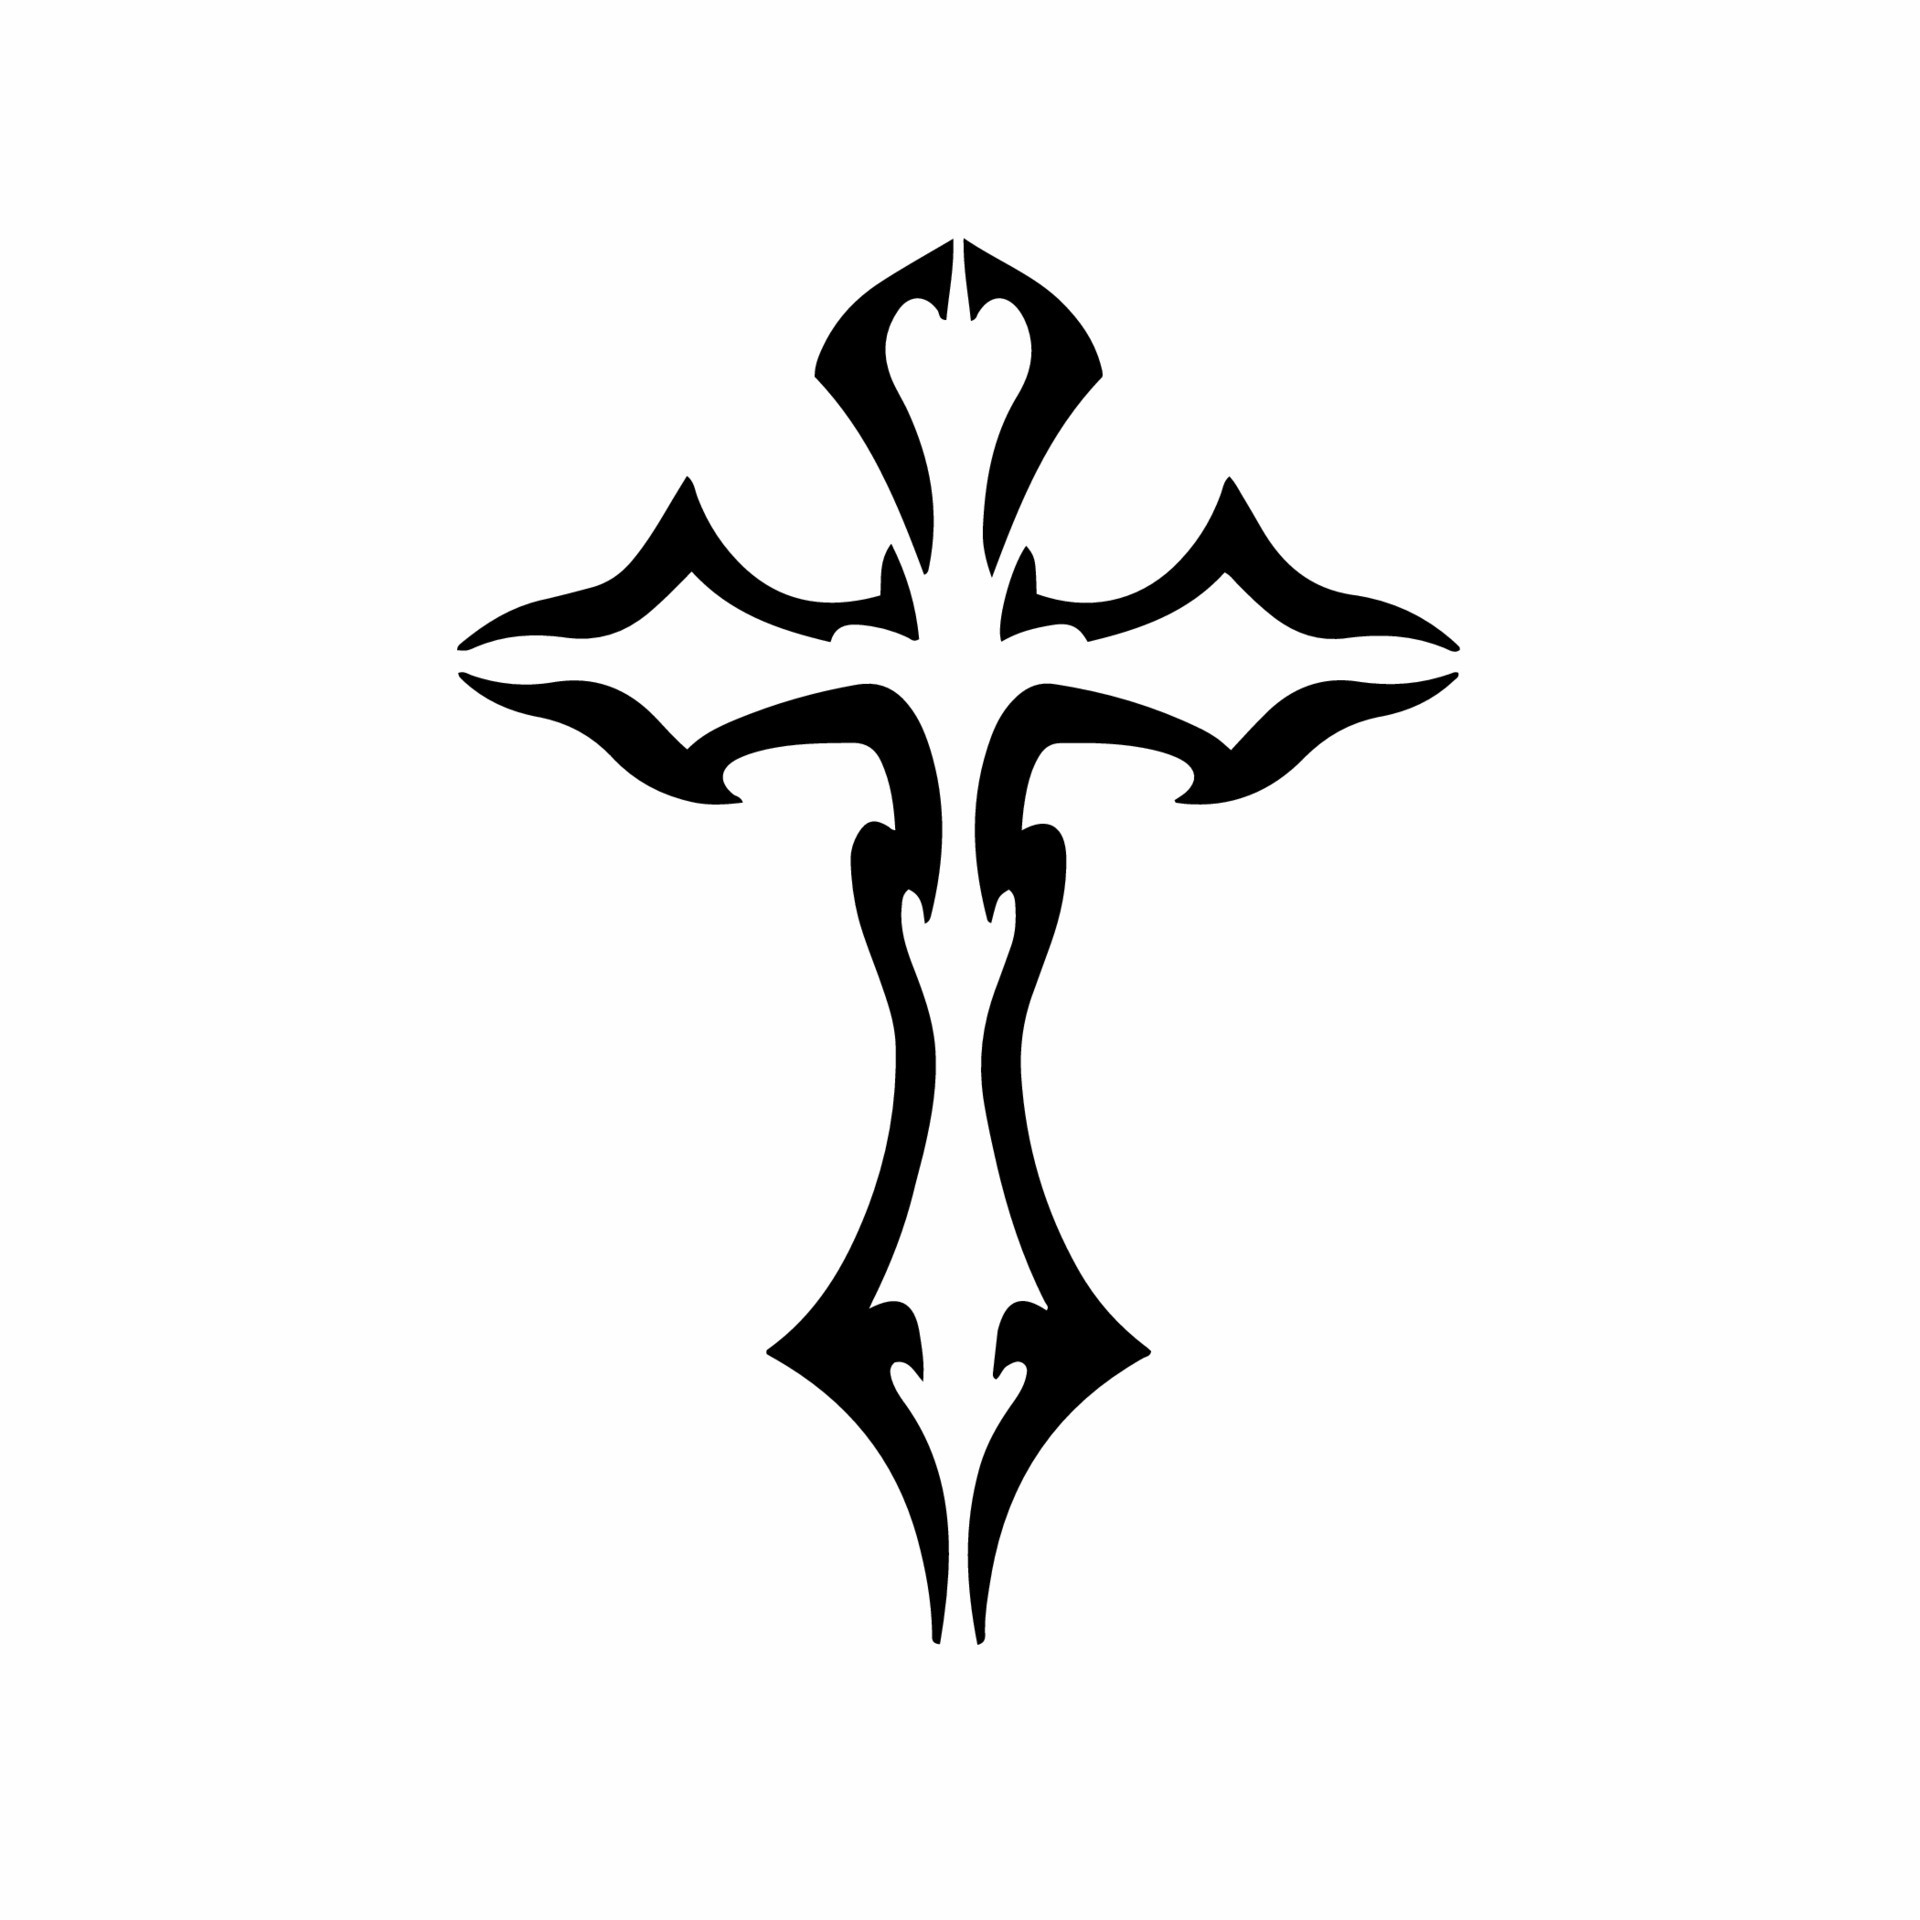 Tribal Christian Cross Logo. Tattoo Design. Stencil Vector Illustration  Royalty Free SVG, Cliparts, Vectors, and Stock Illustration. Image  173683578.